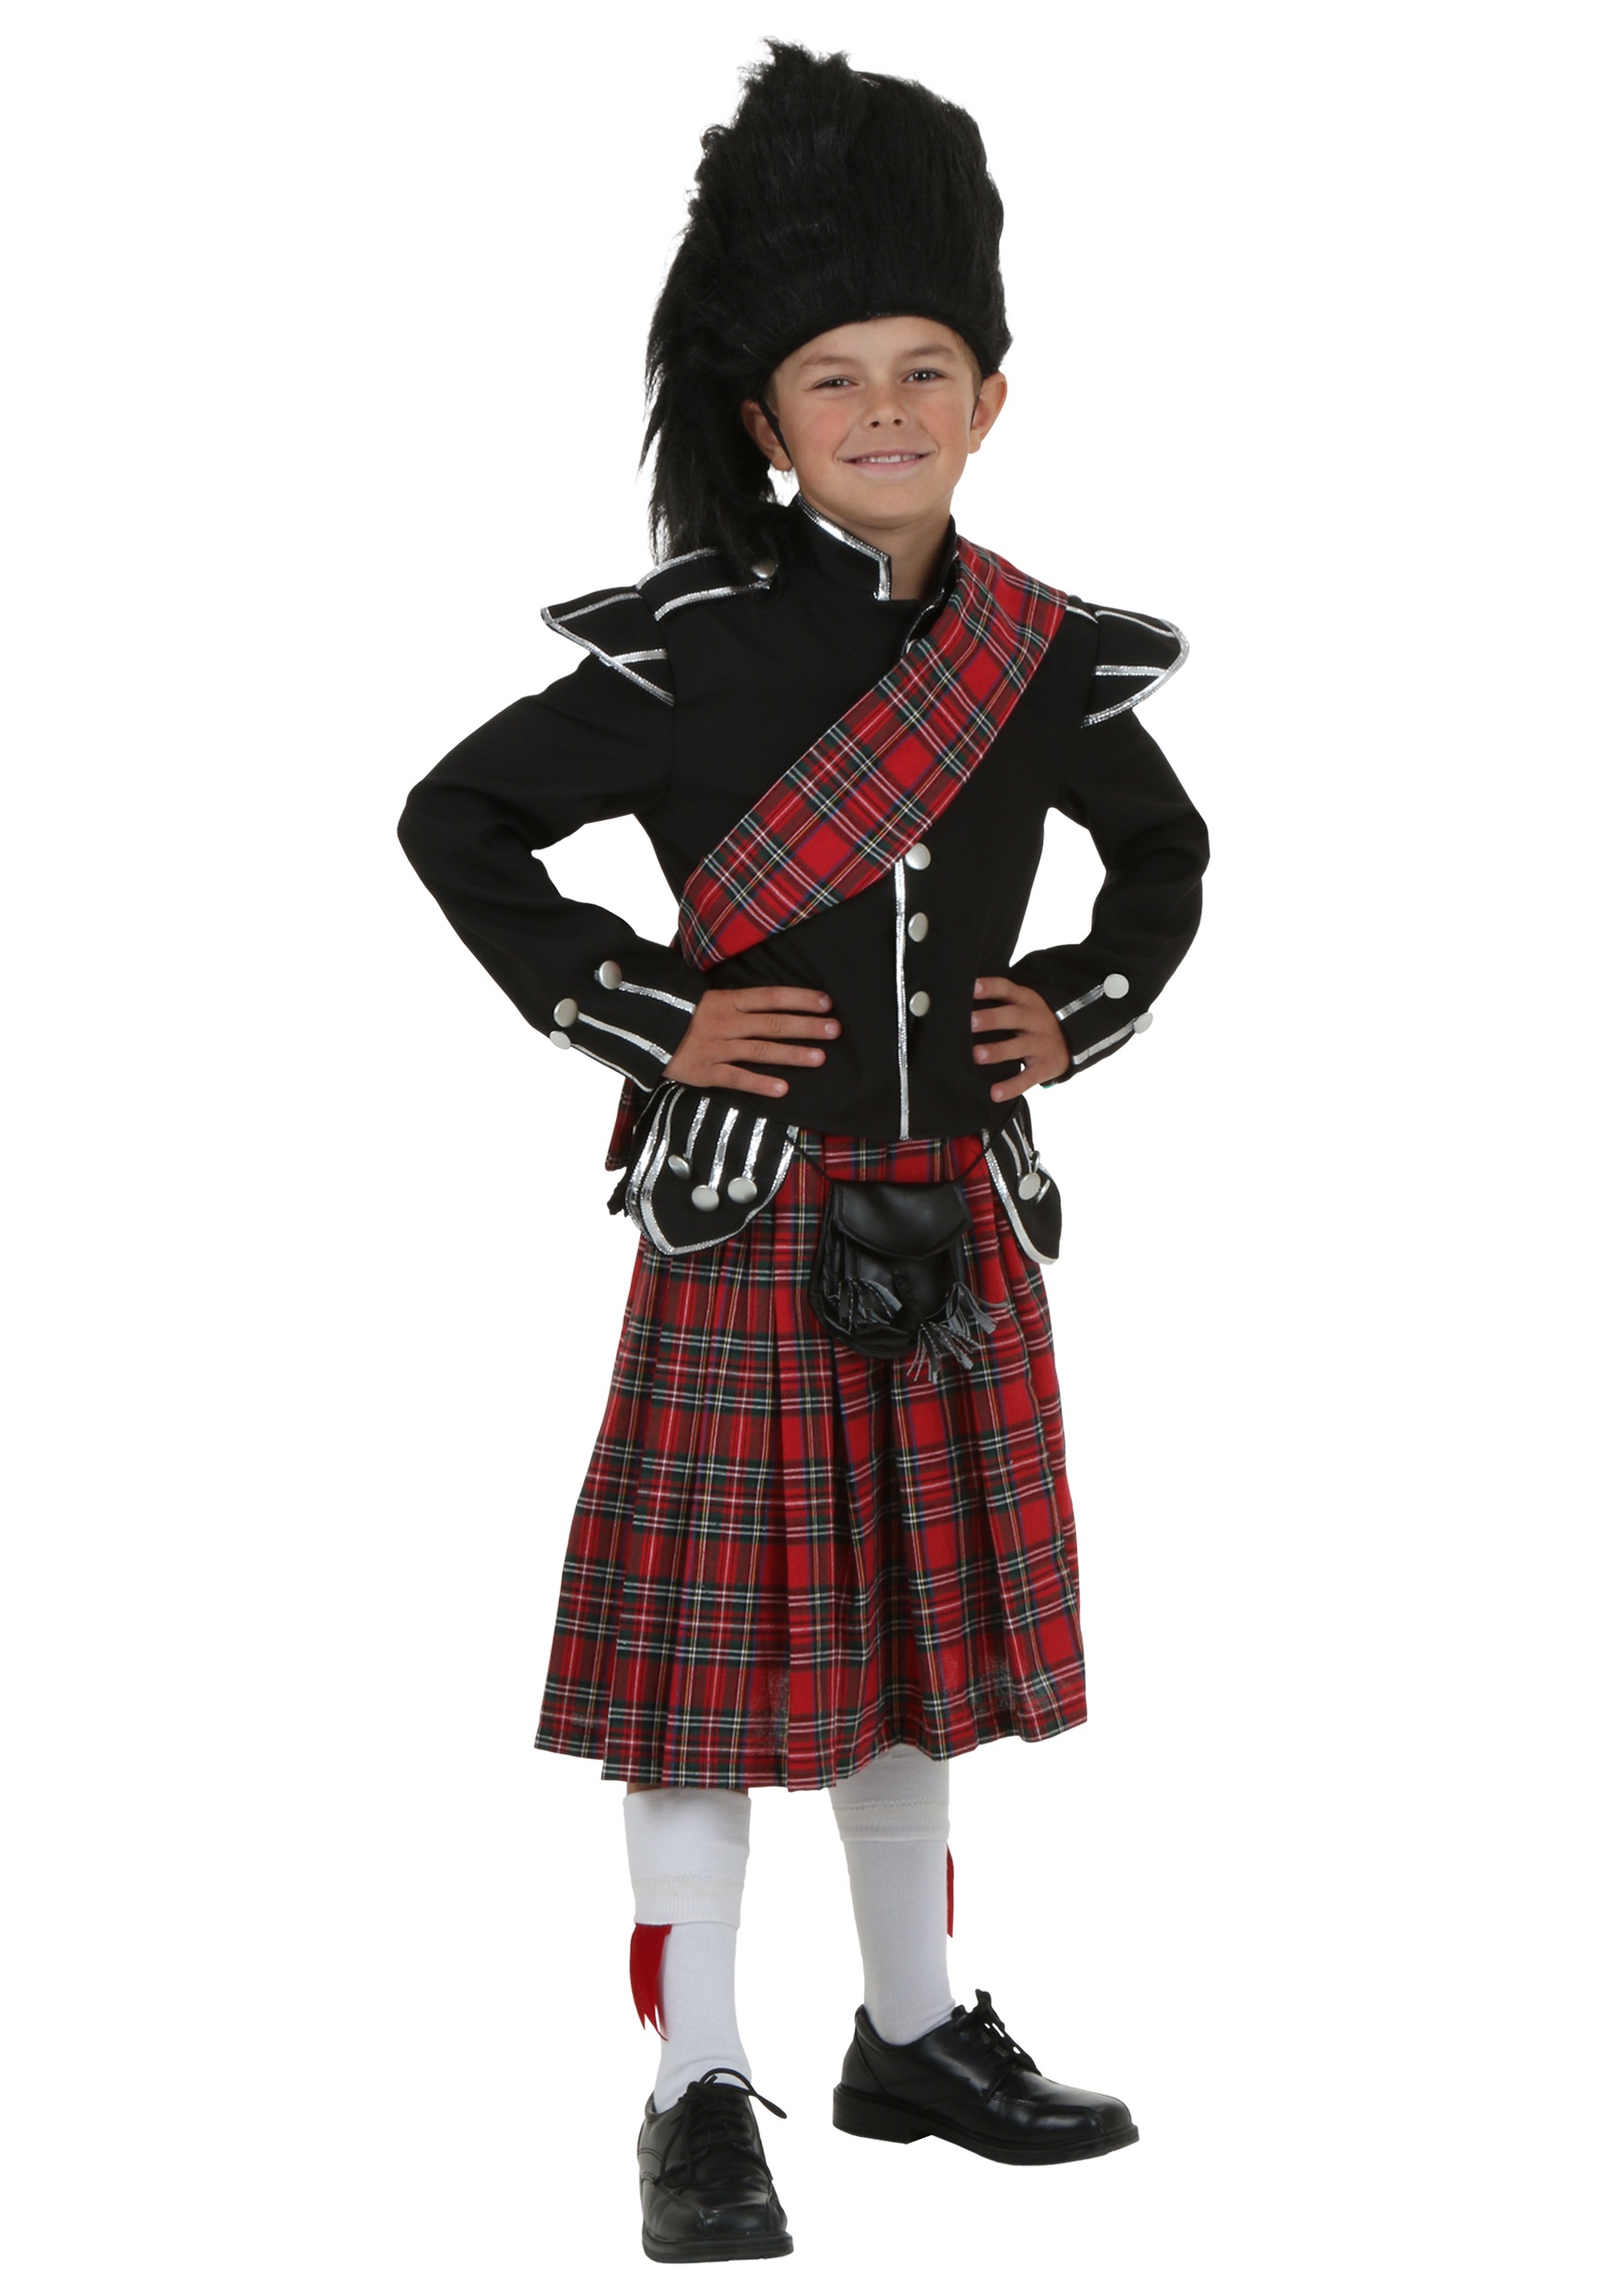 Photos - Fancy Dress FUN Costumes Child Scottish Costume Black/Red